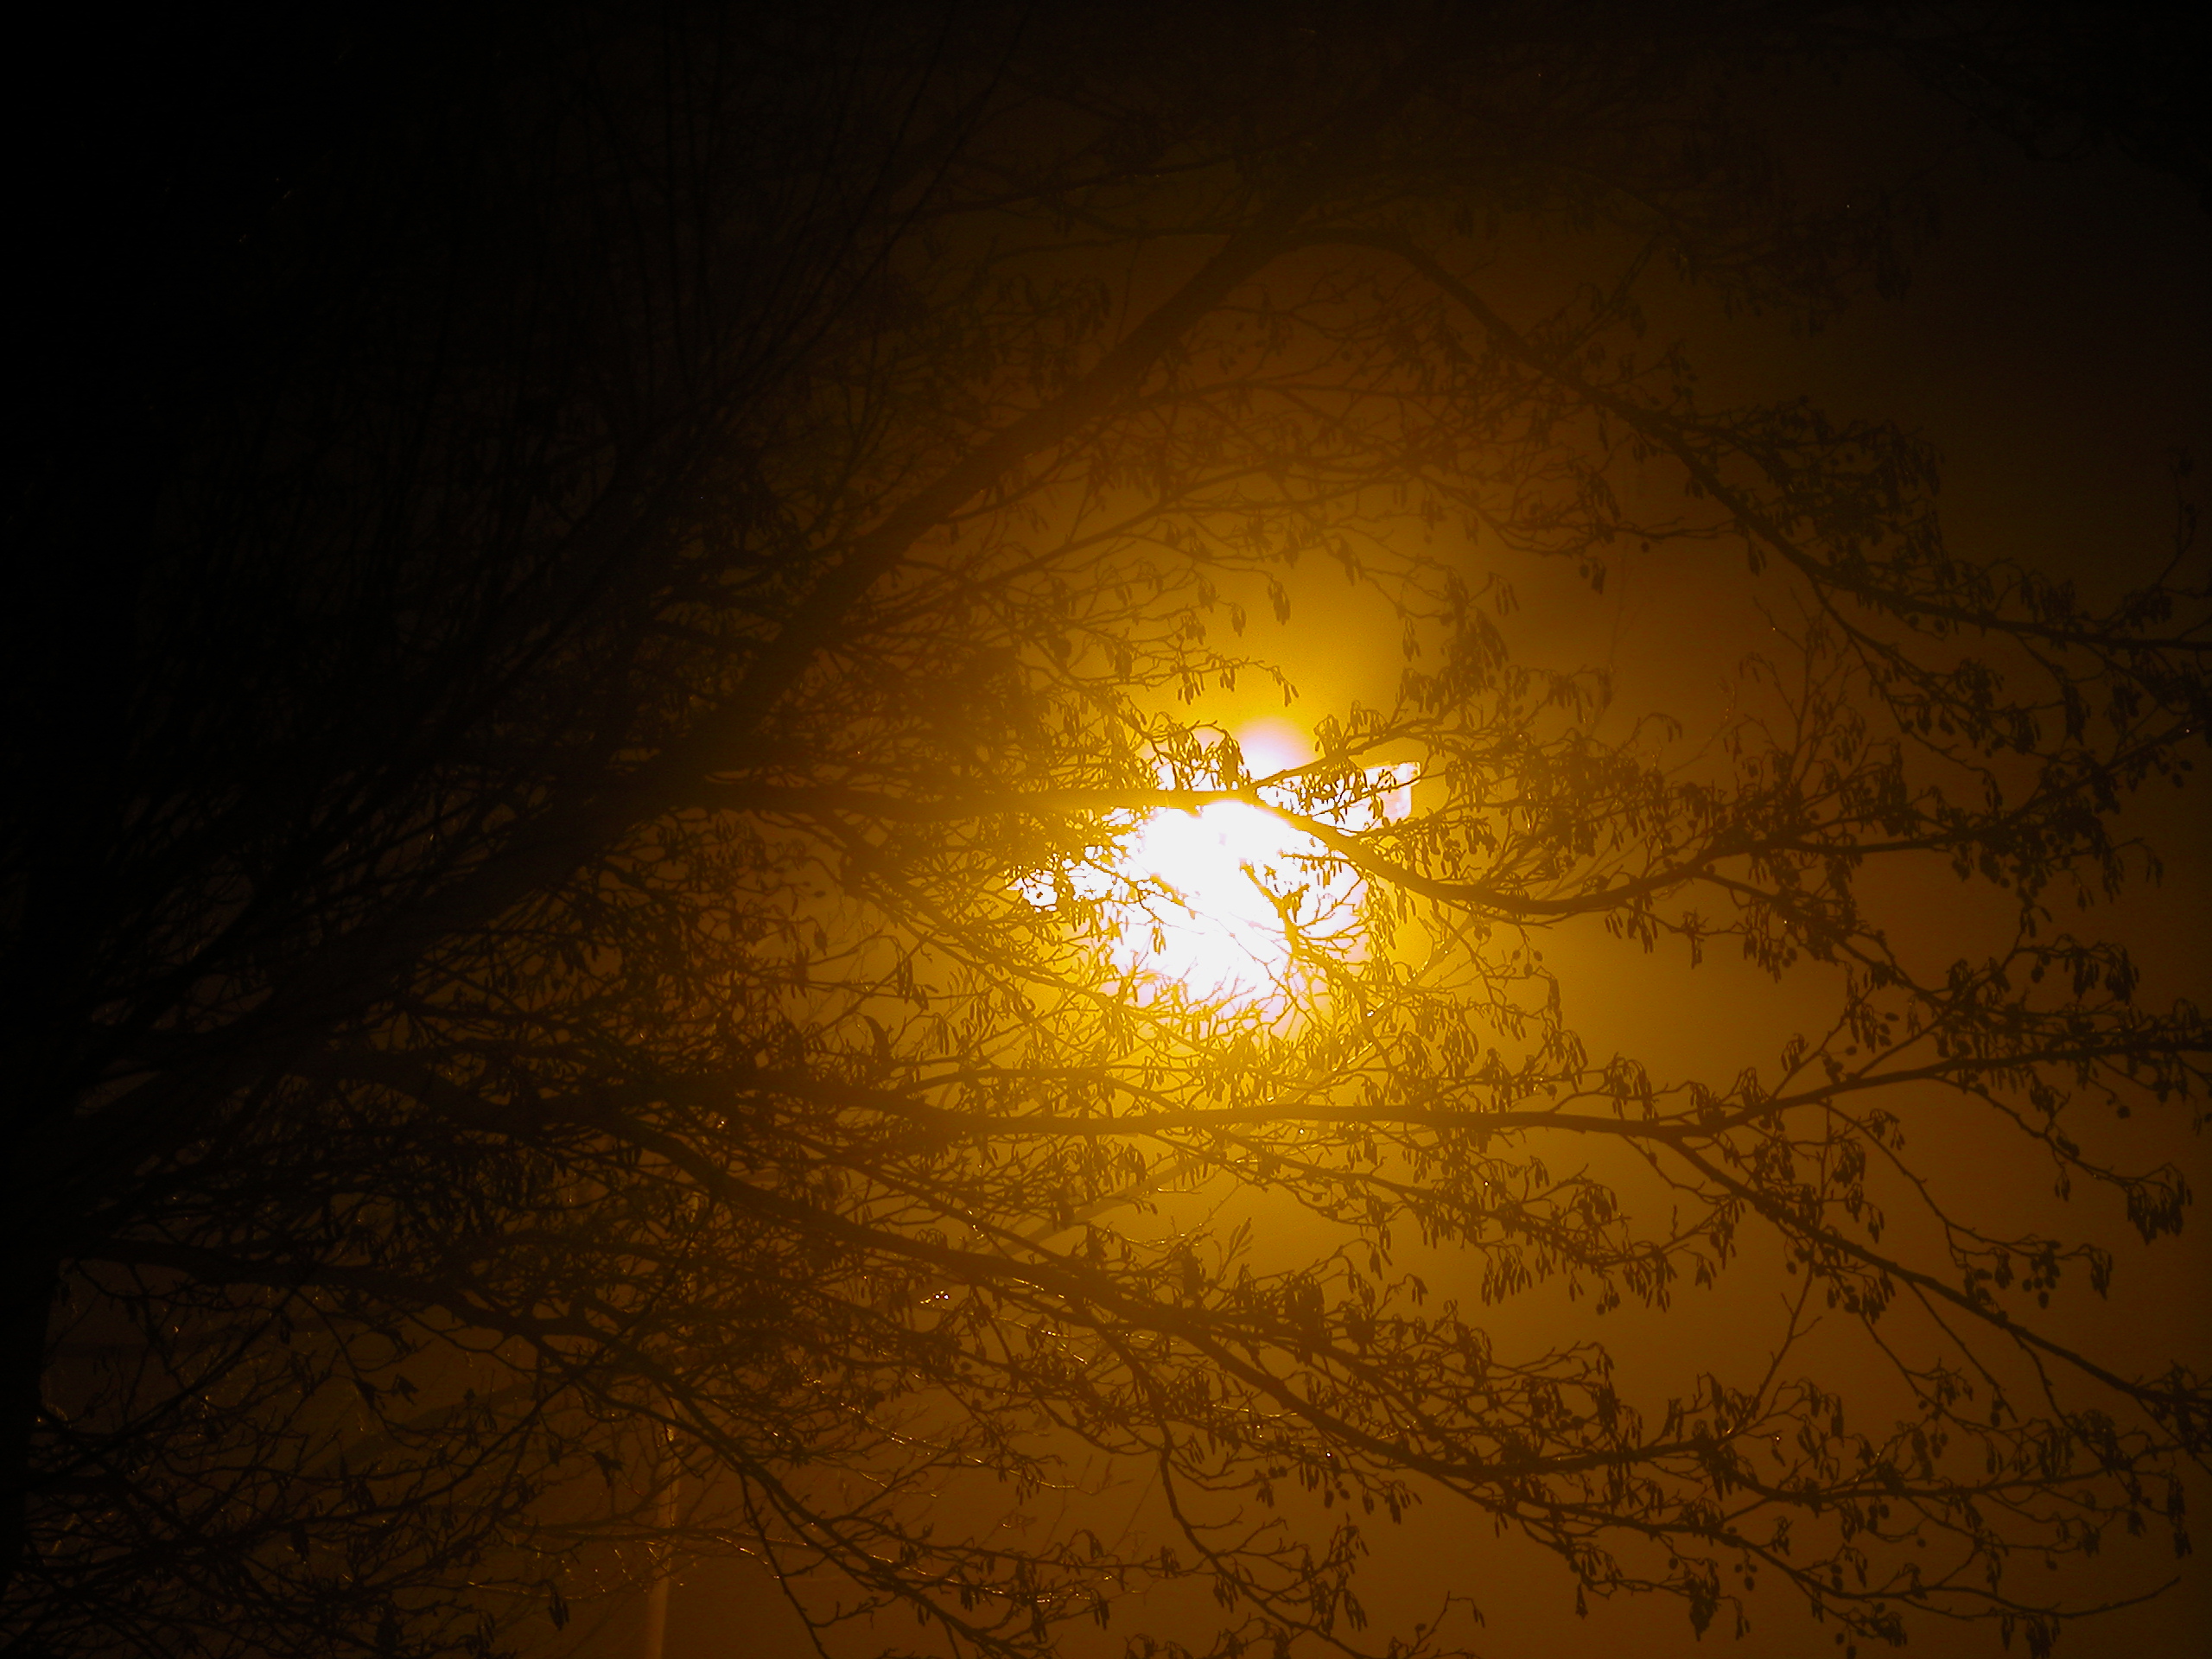 lightfx lighteffects tree branch branches silhouette lantern streetlantern light moon moonlight